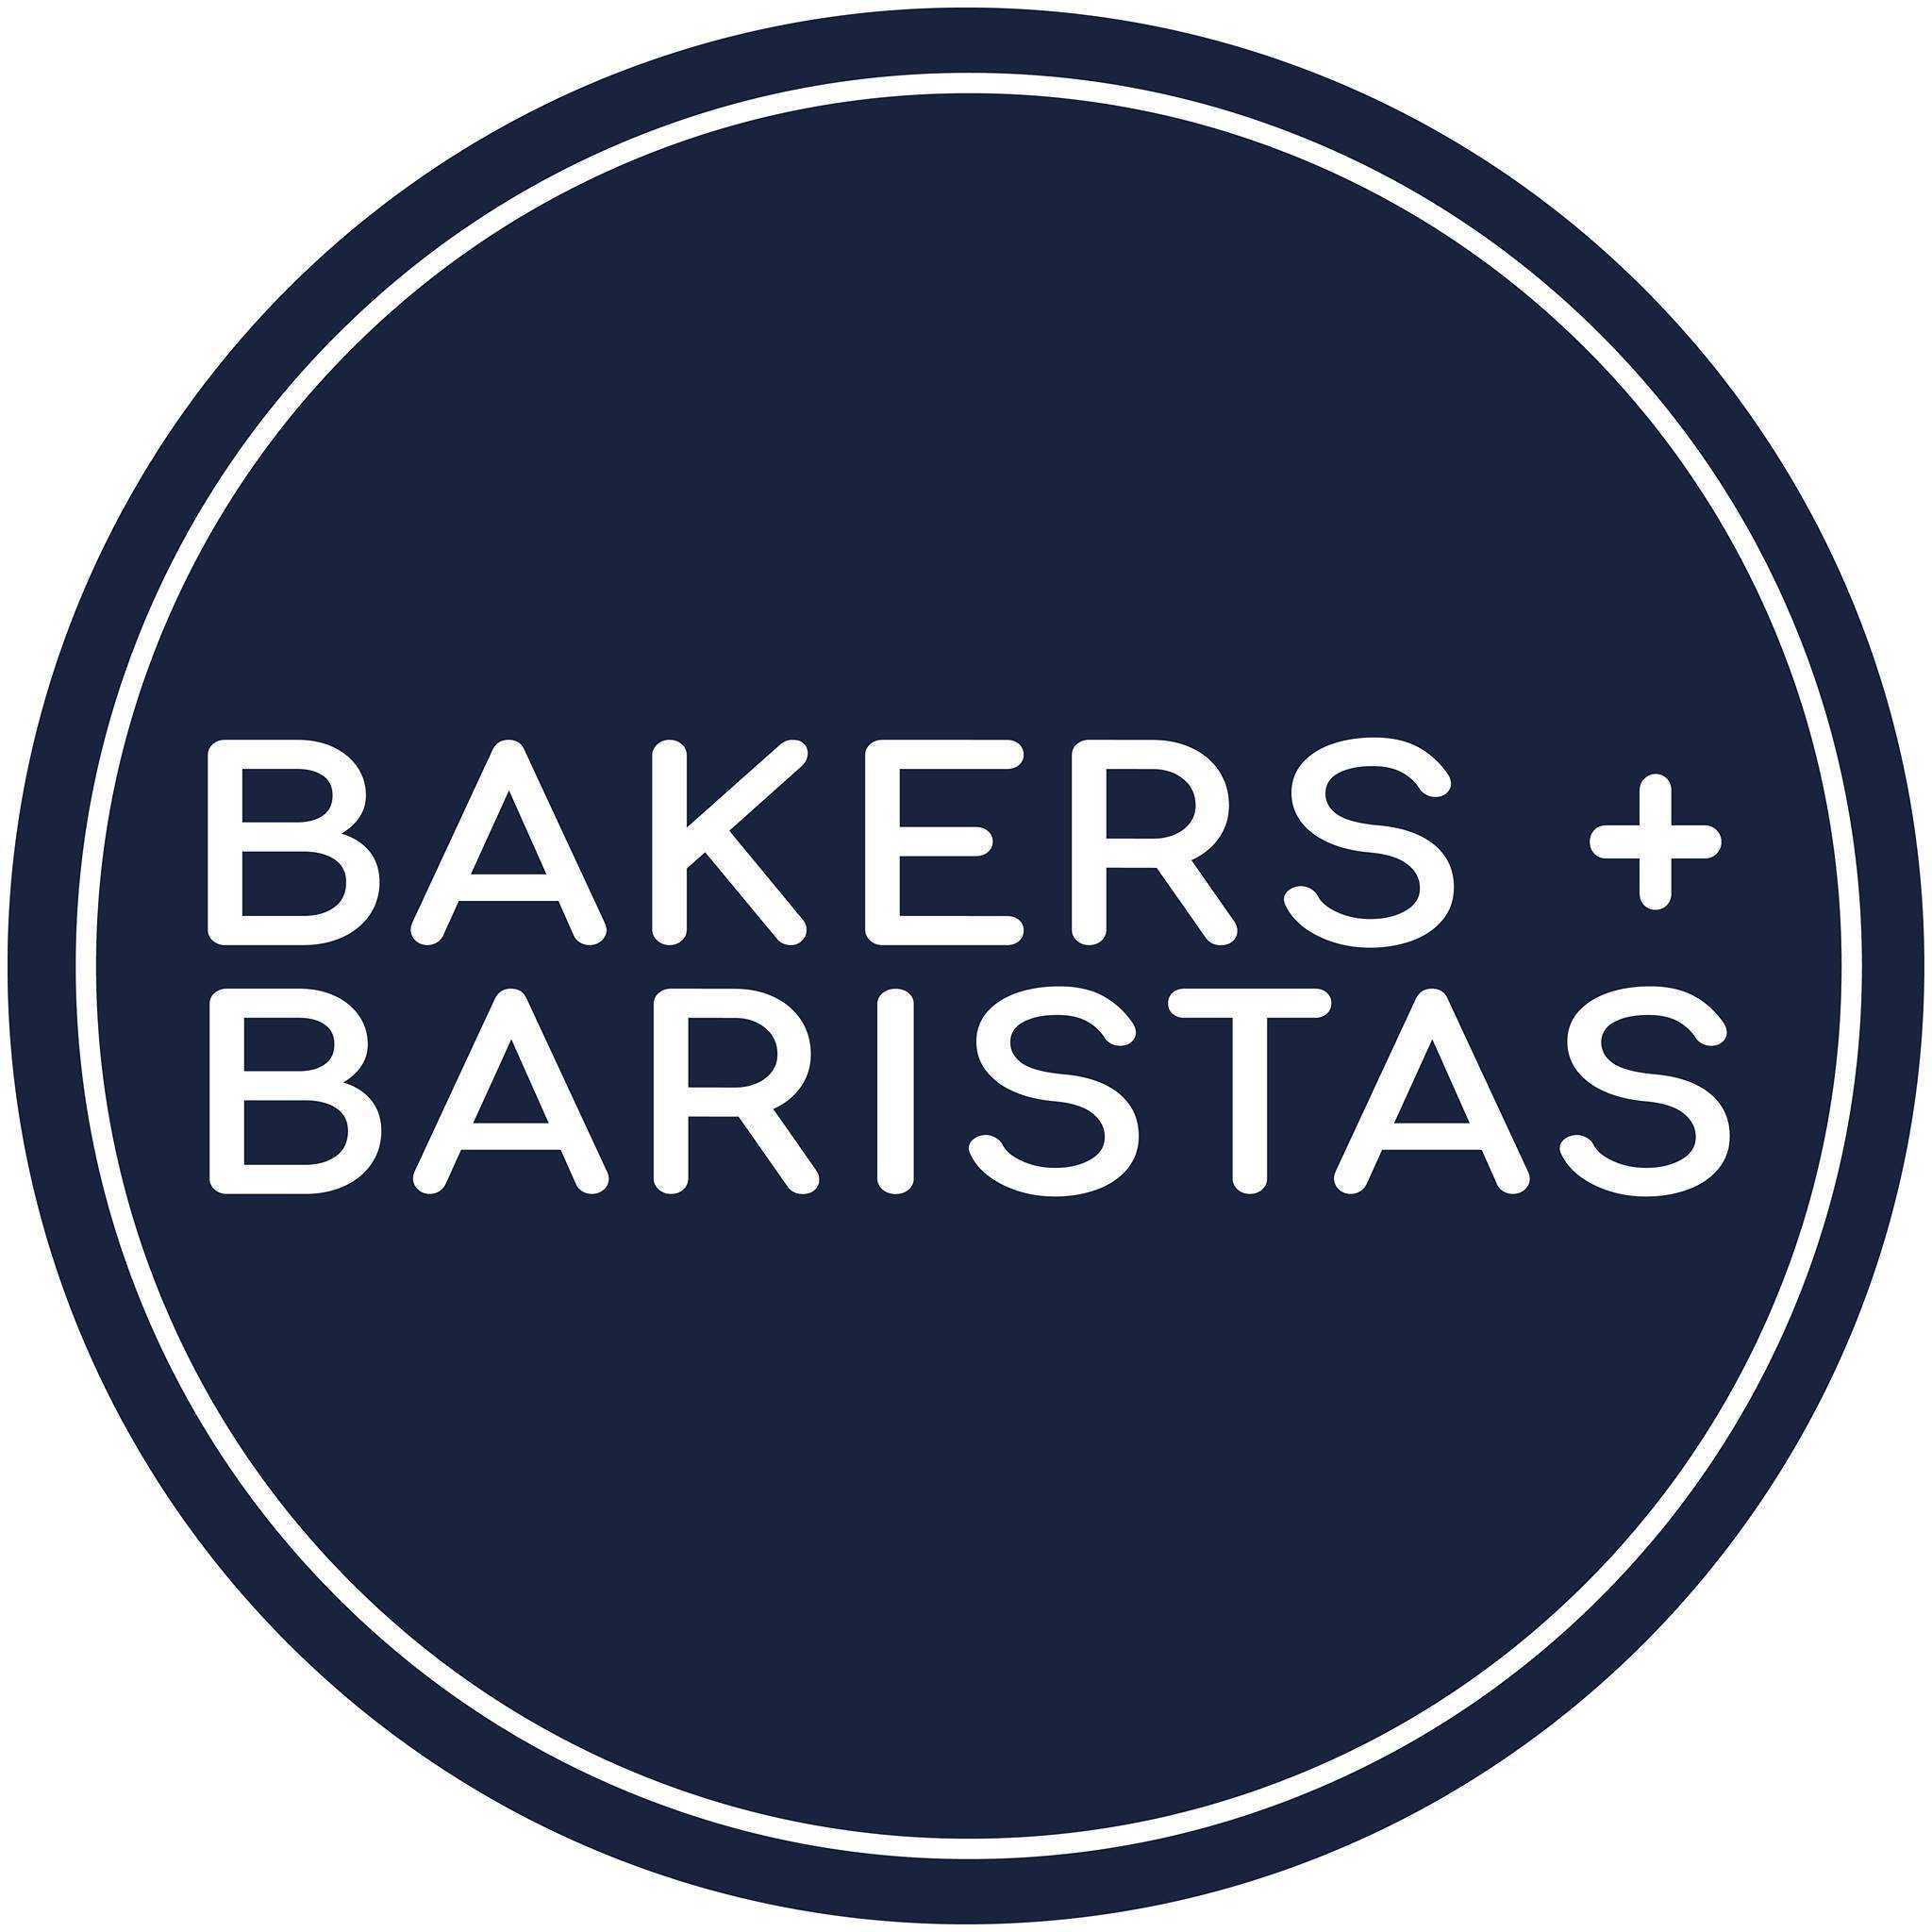 Bakers Baristas logo